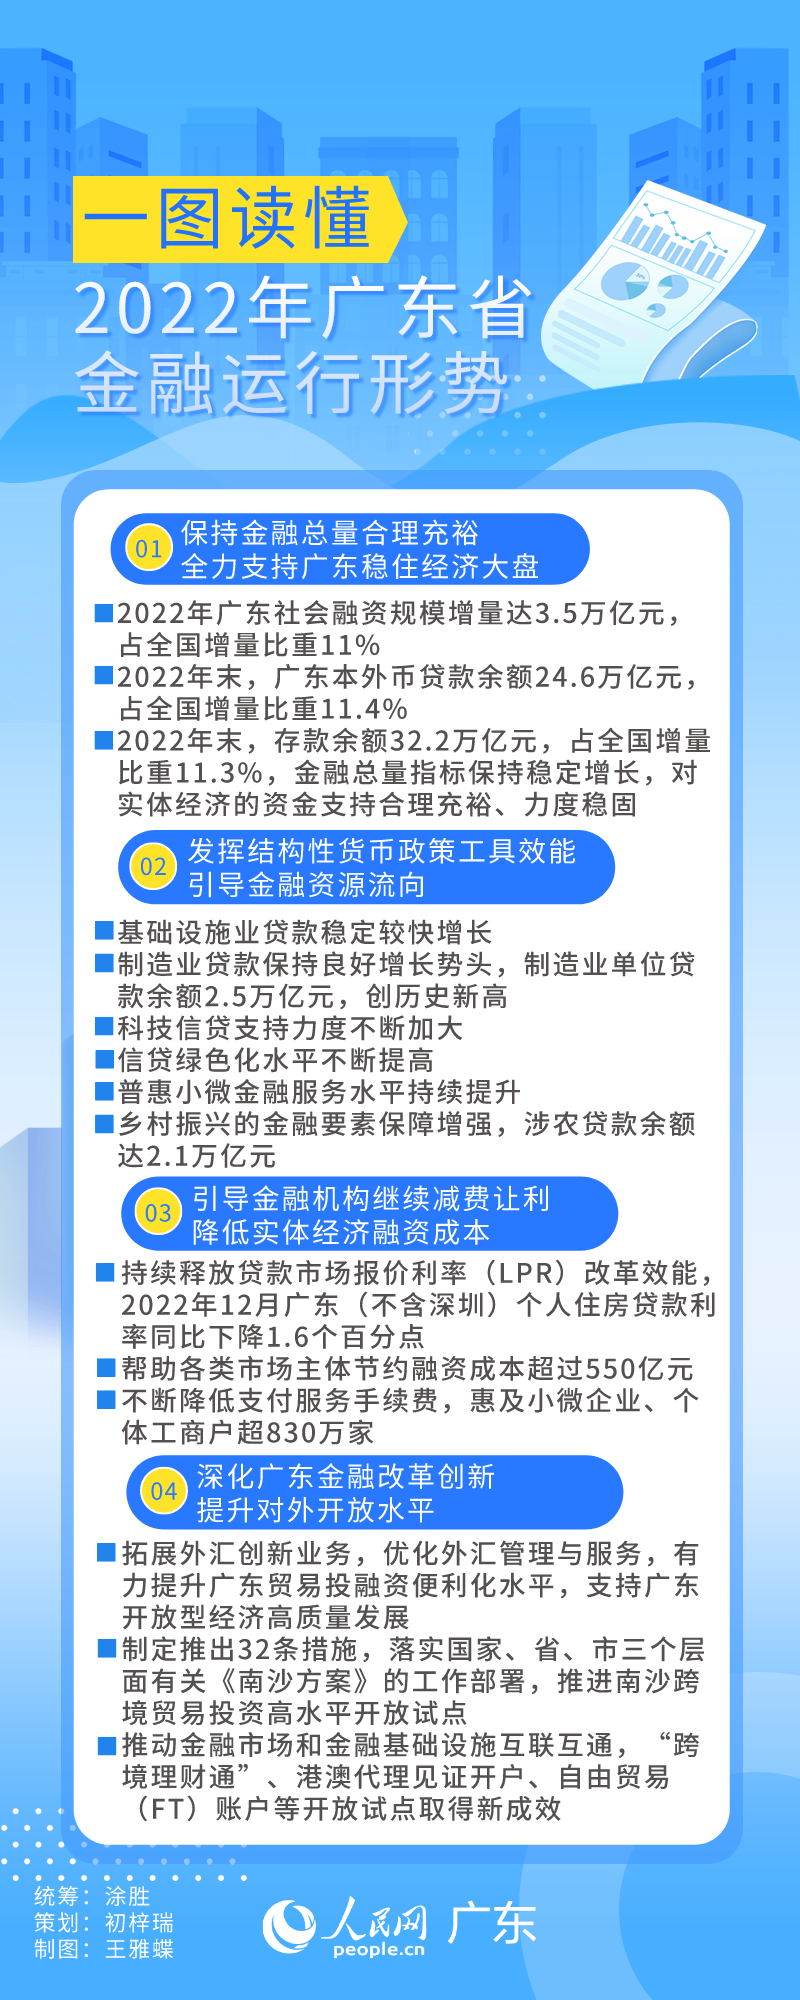 bat365中文官方网站一图读懂2022年广东省金融运行形势(图1)